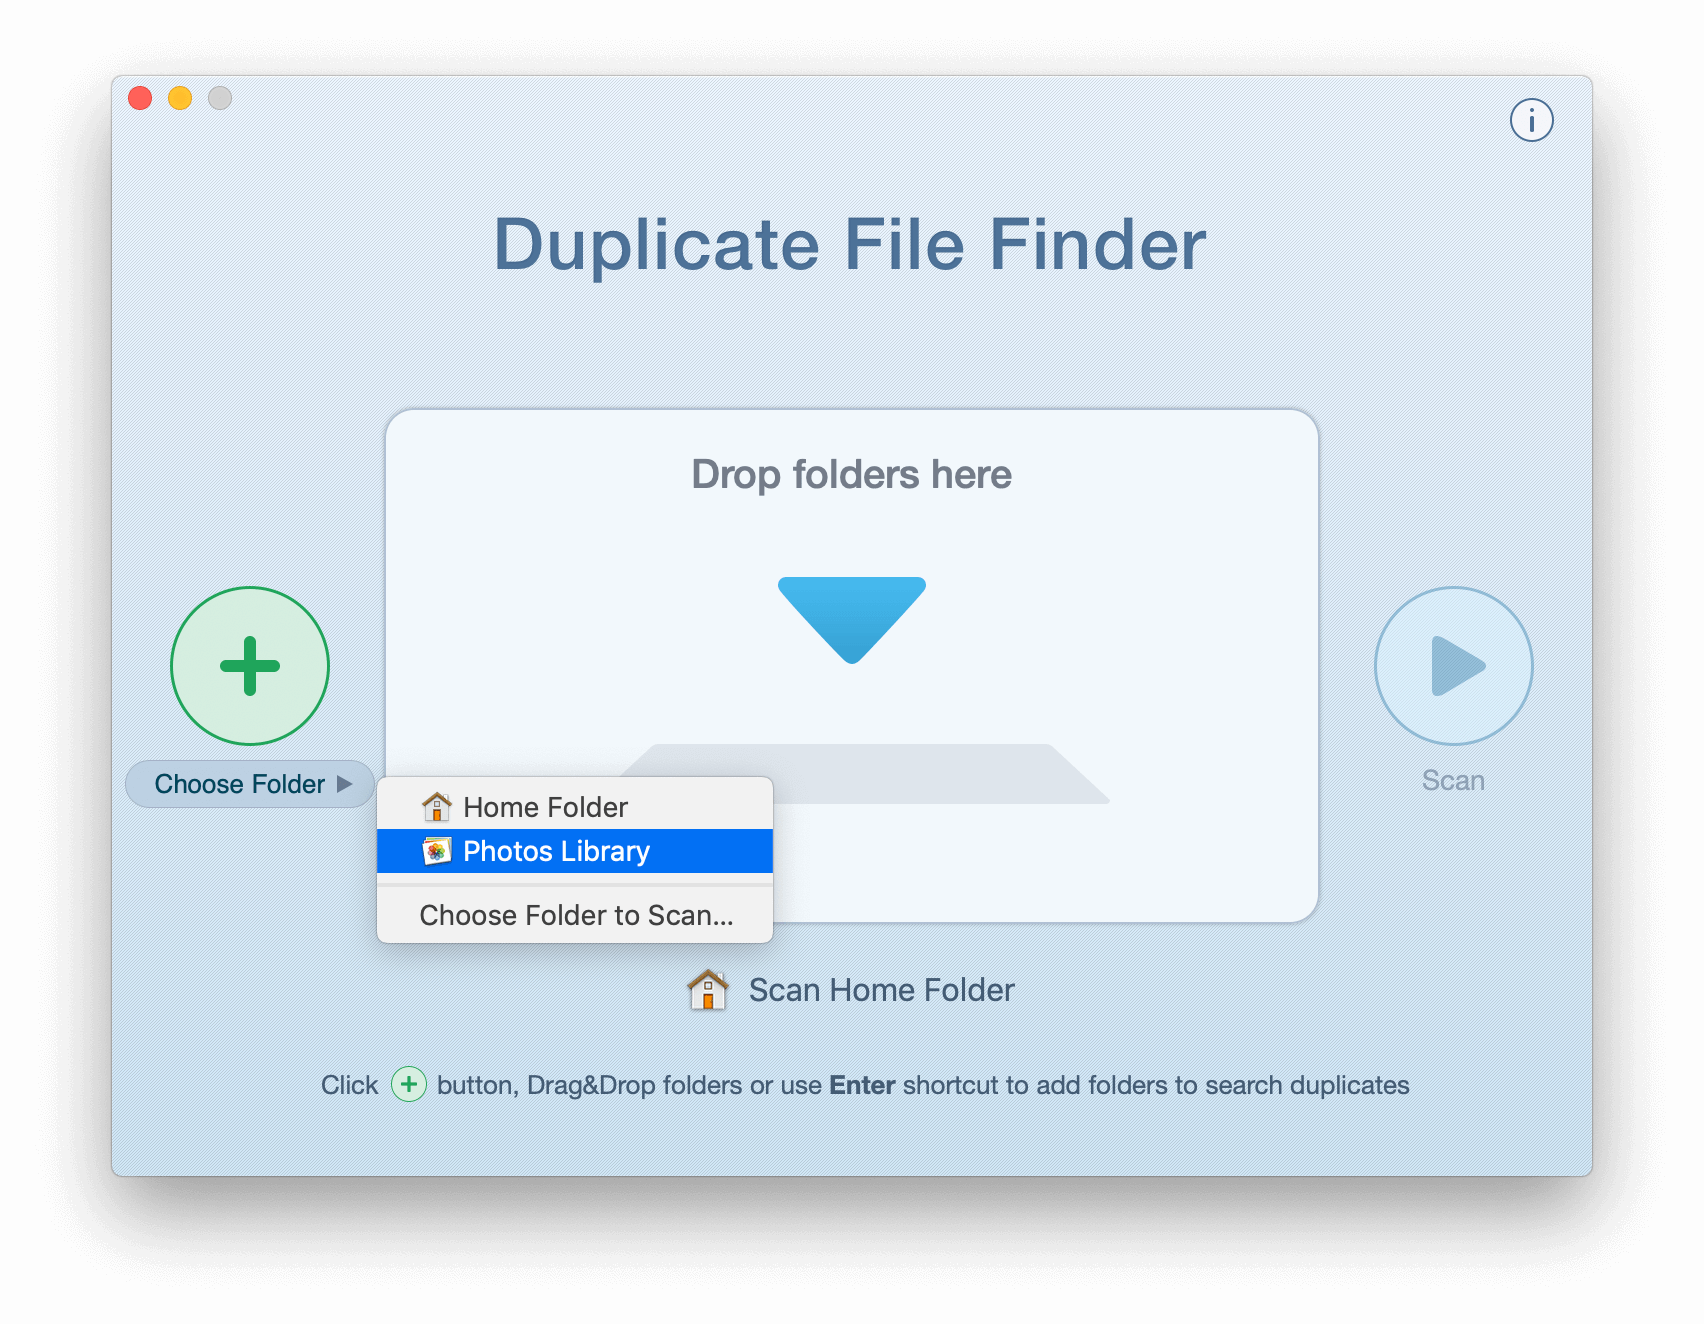 duplicate file finder start window with drop menu to choose folder for scanning